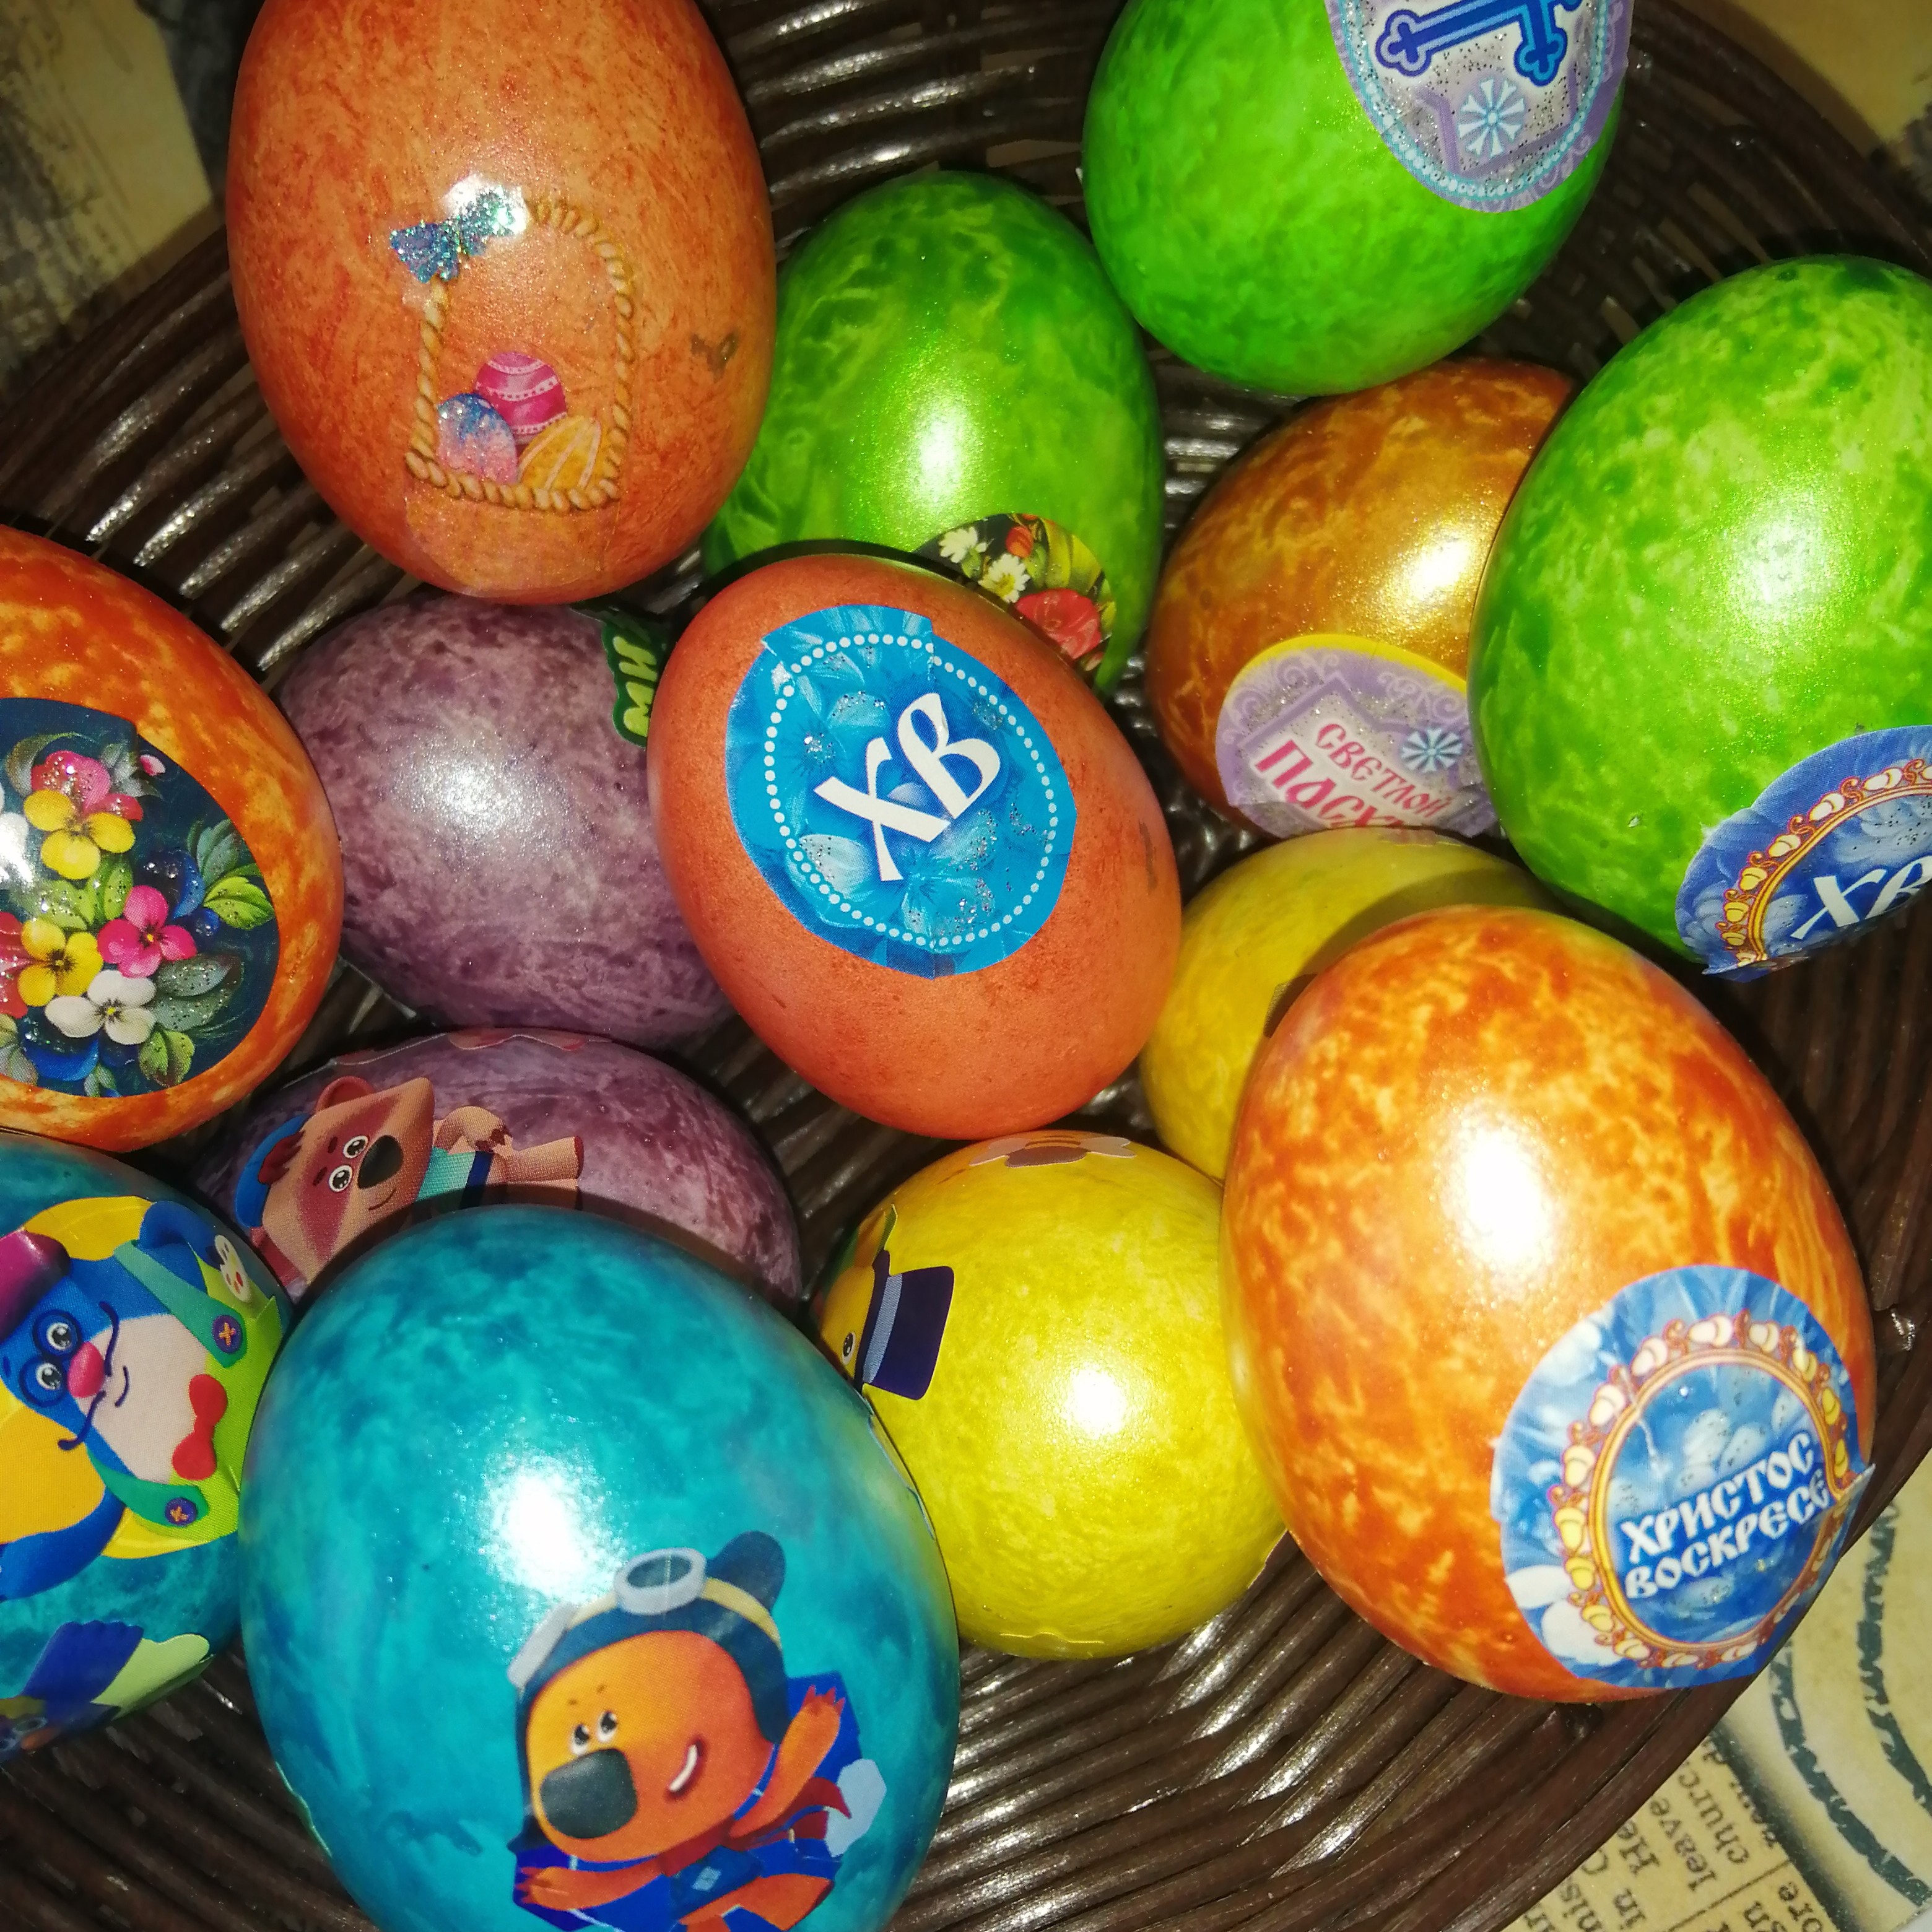 Красим яйца на Пасху